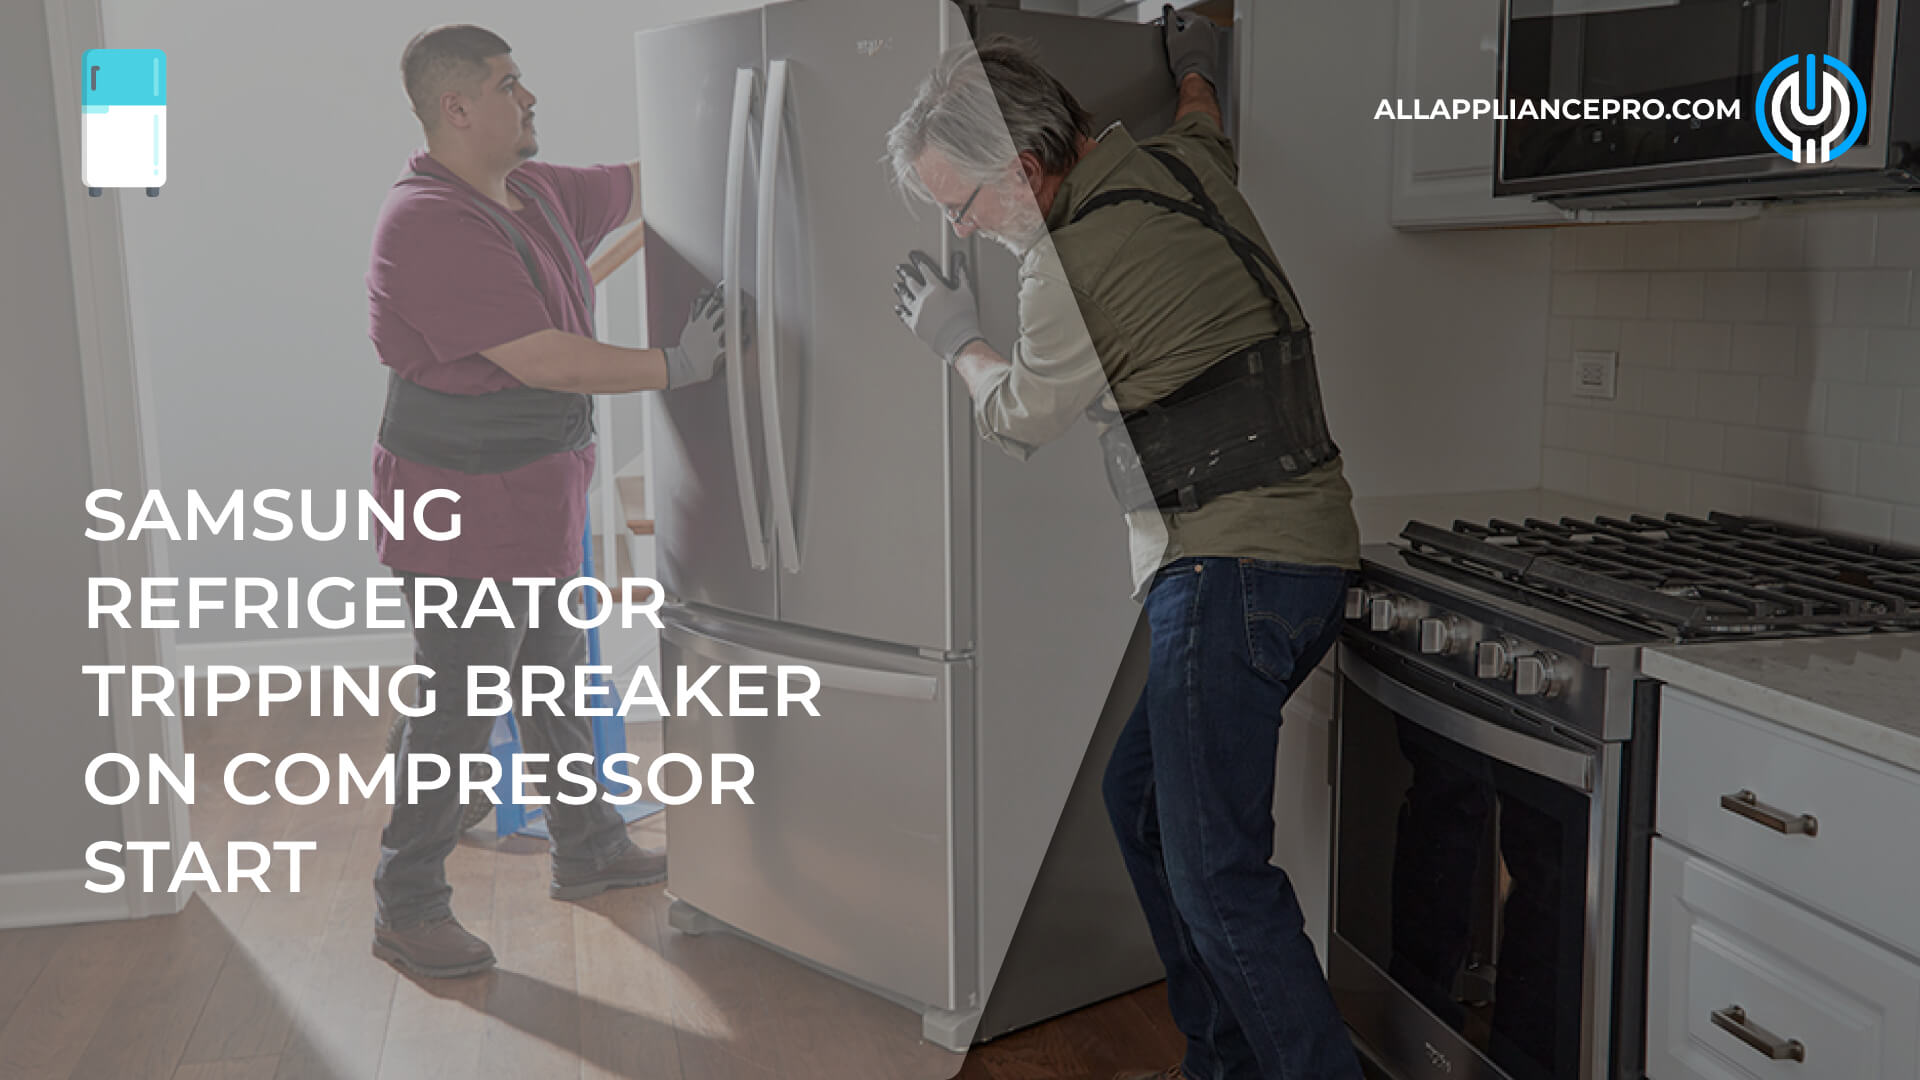 Samsung Refrigerator Tripping Breaker on Compressor Start